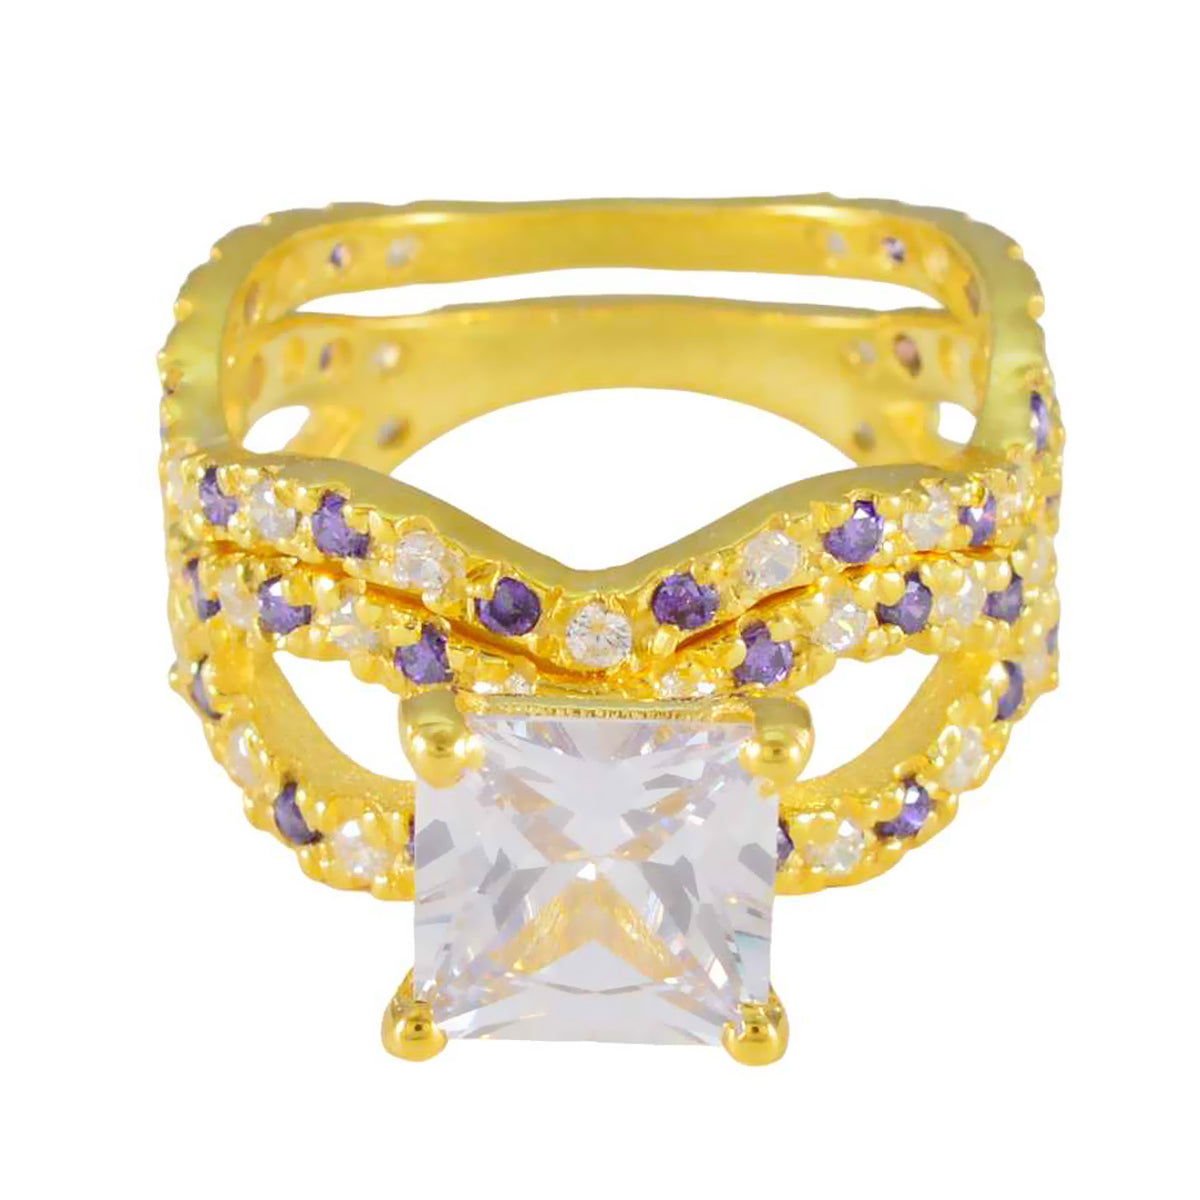 Riyo Charming Silver Ring With Yellow Gold Plating Amethyst Stone Square Shape Prong Setting Handamde Jewelry Engagement Ring